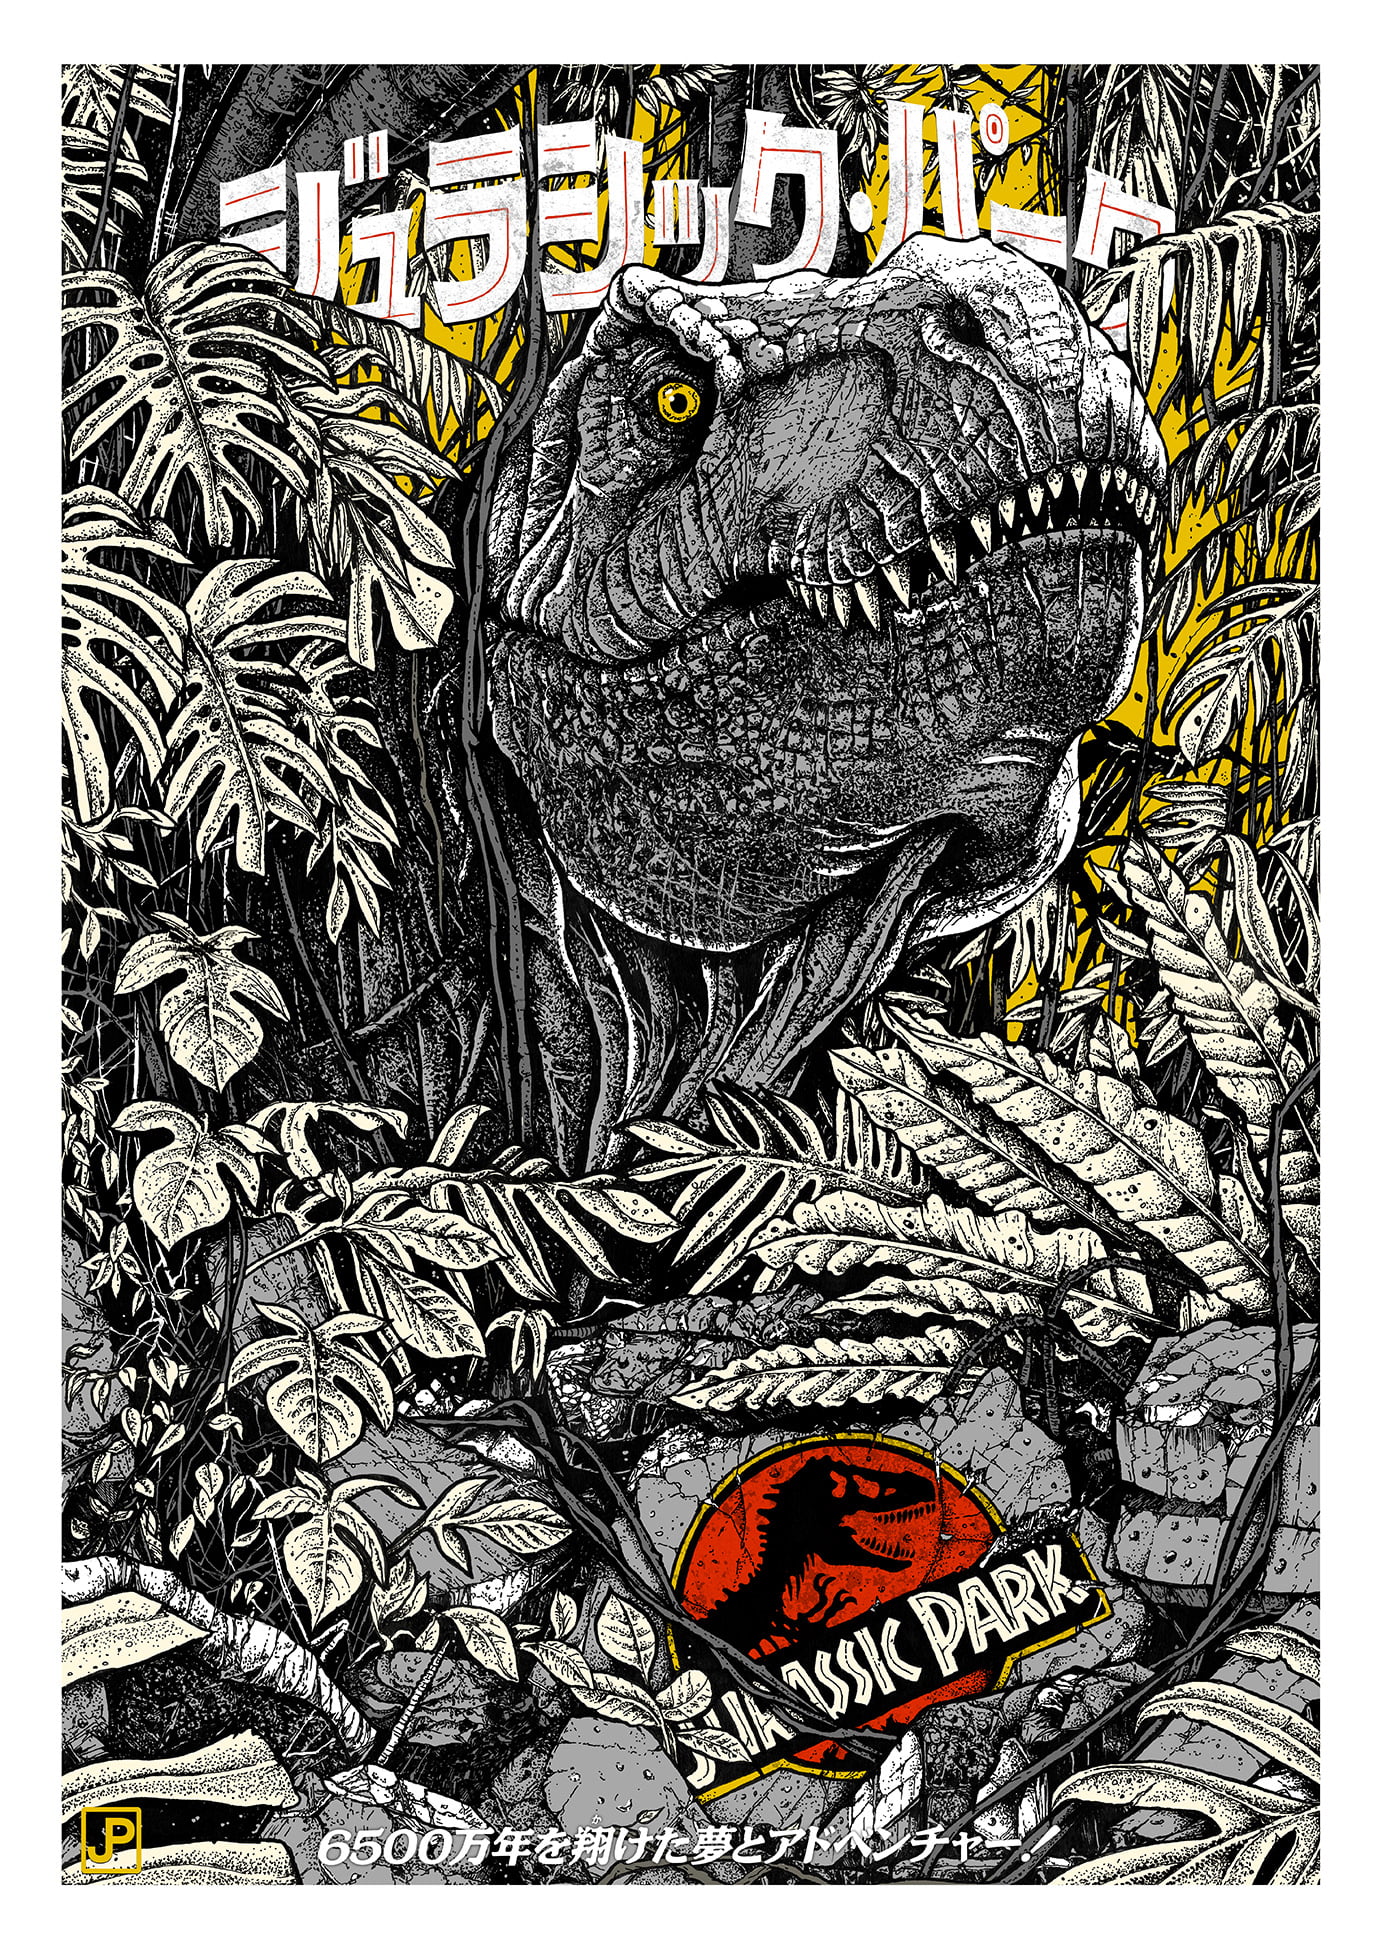 Jurassic Park, movie poster, dinosaurs